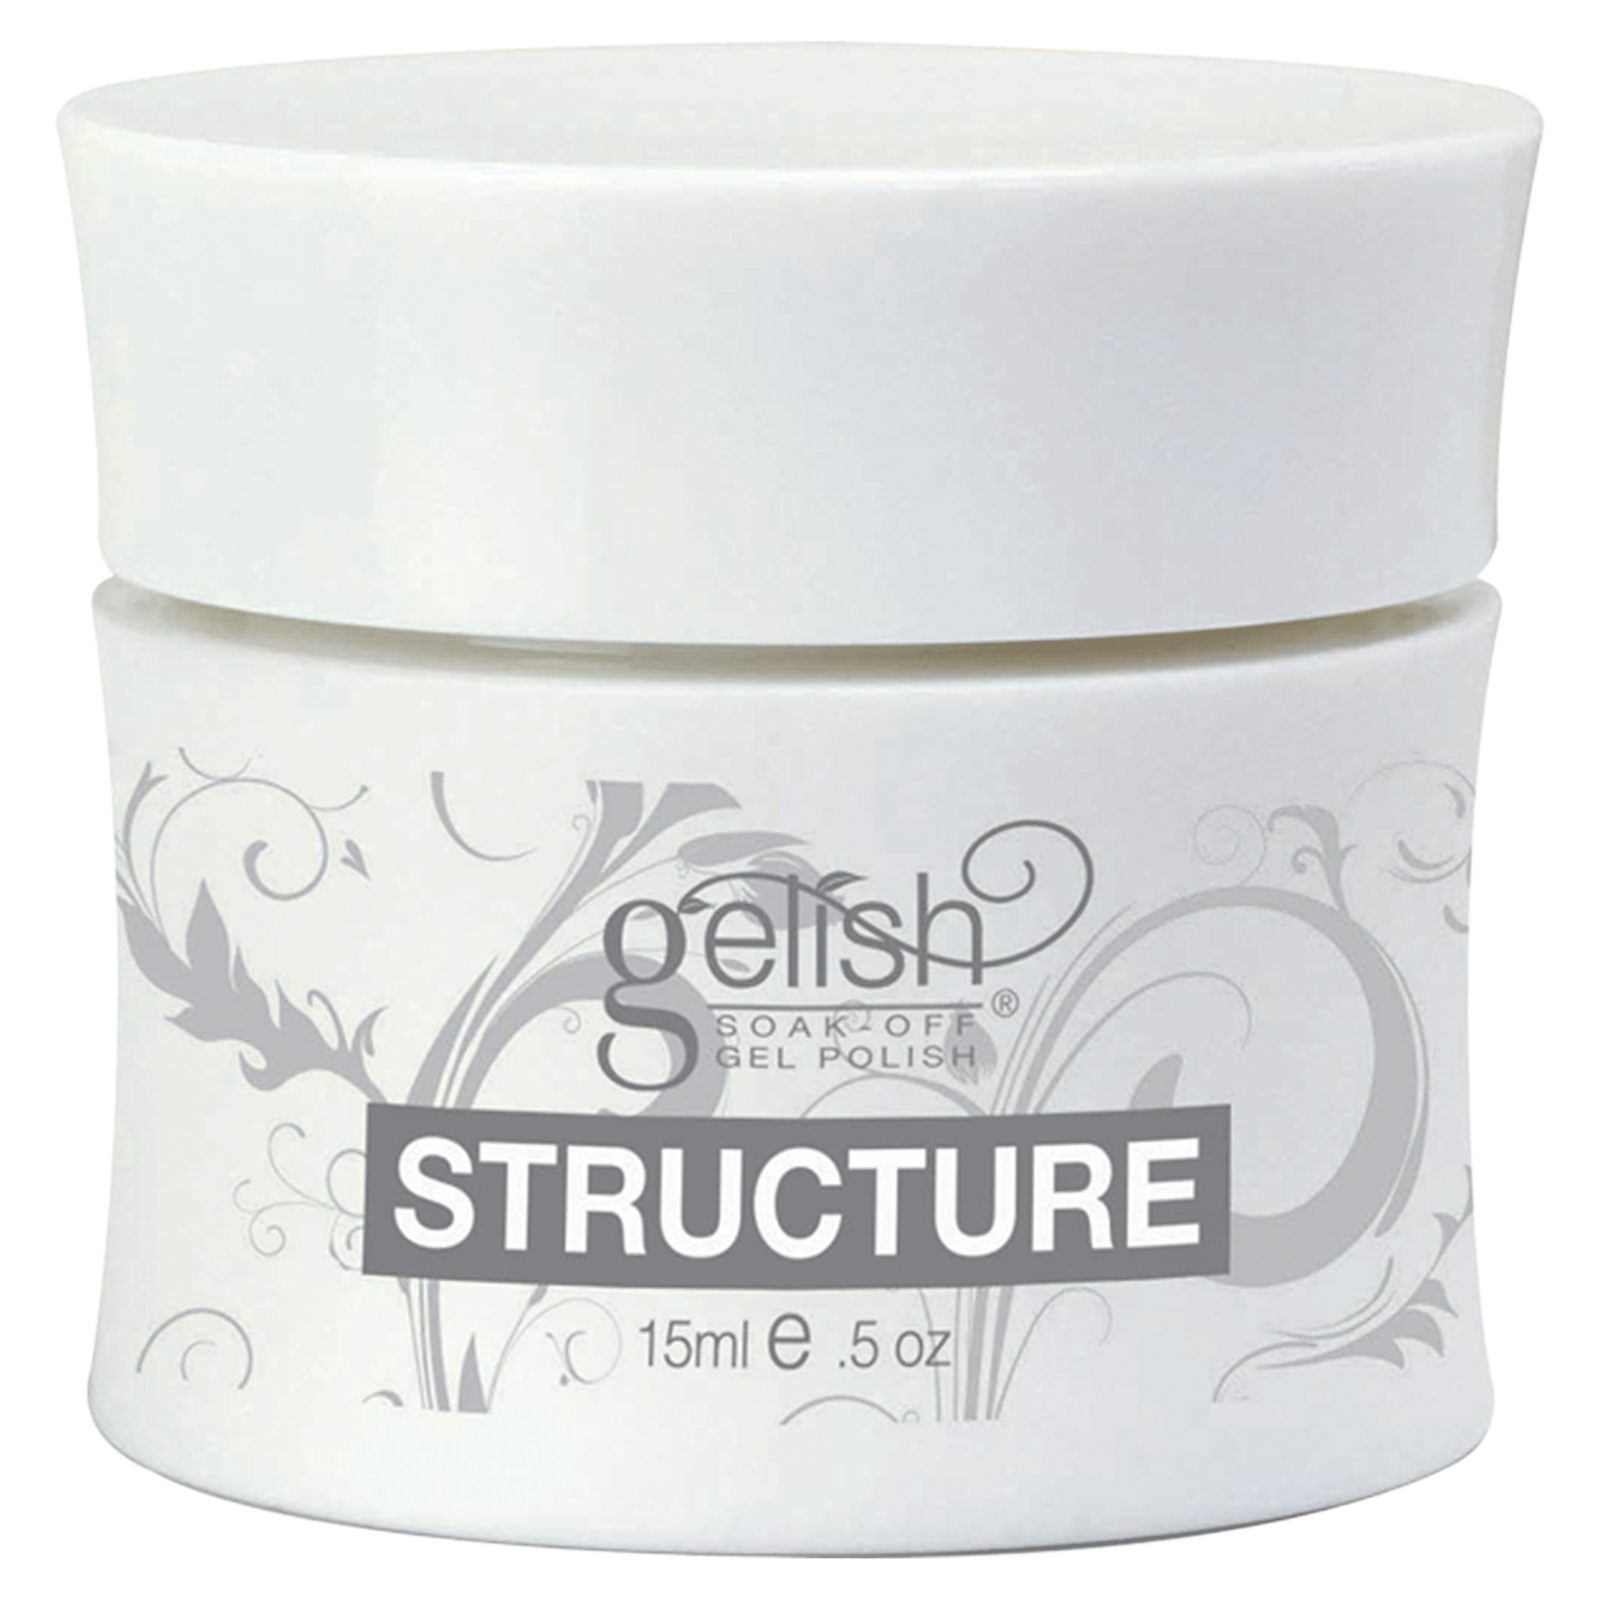 Structure gel 1.16 5. Укрепляющий гель Gelish, structure Clear. Структурный гель для ногтей. Скульптурный гель для ногтей.